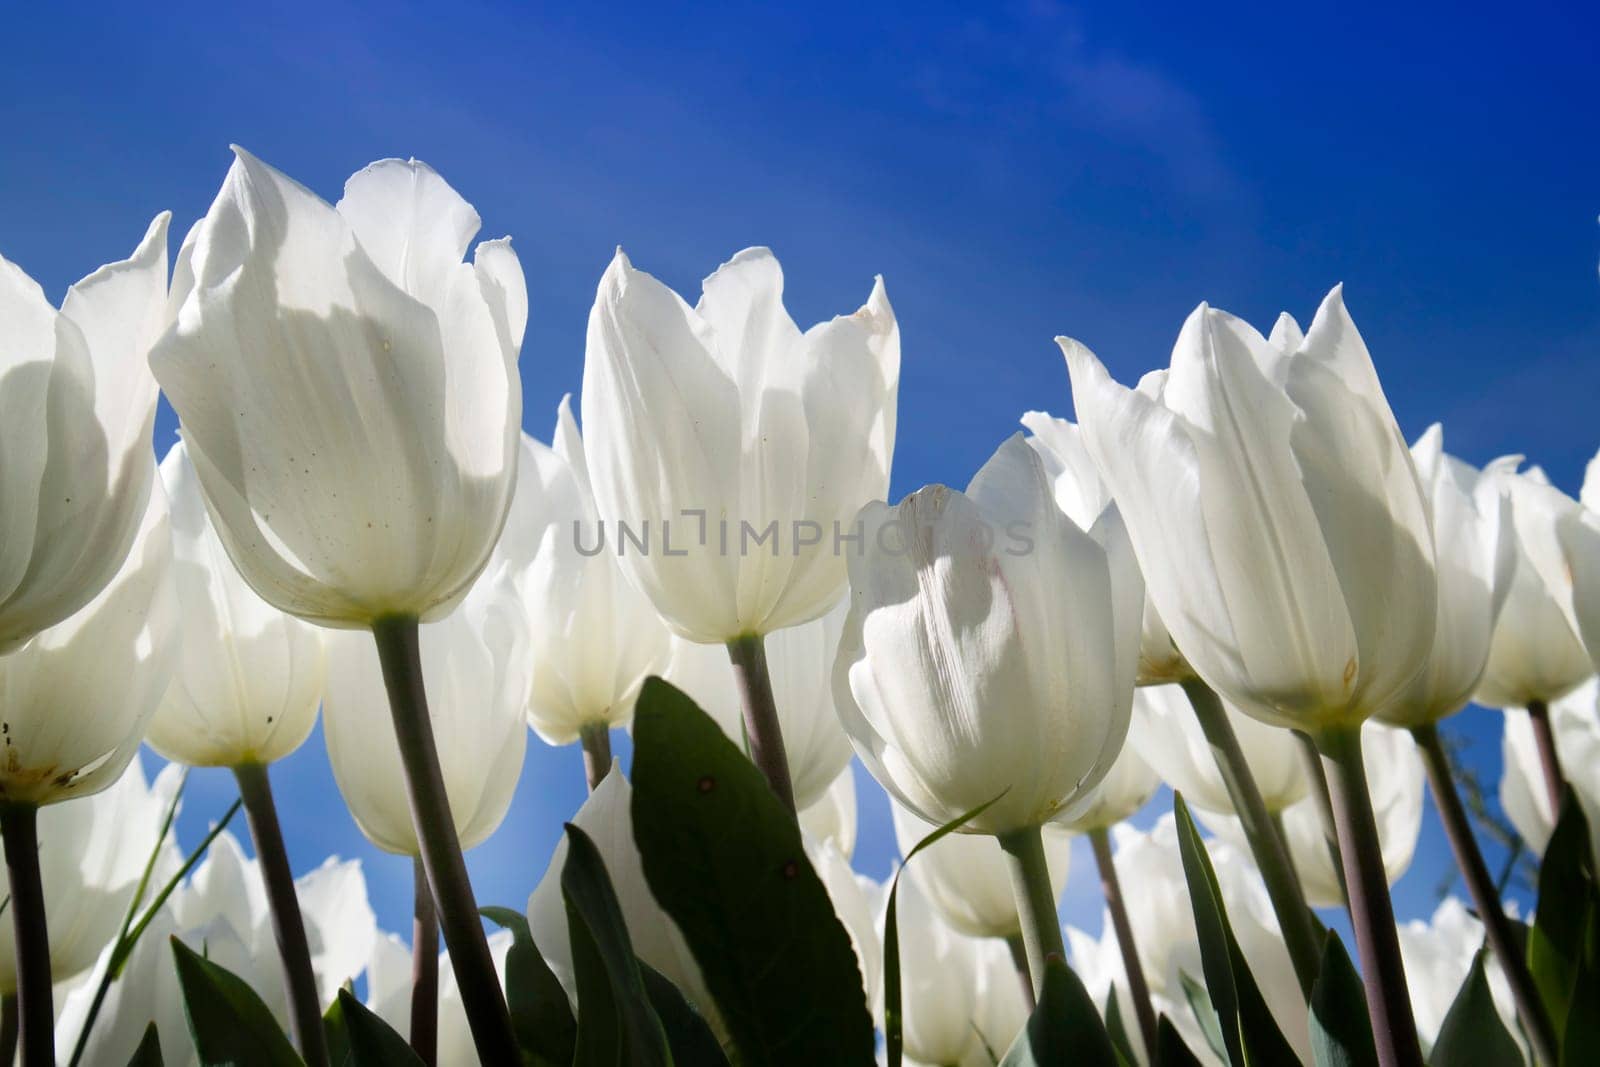 Photographic documentation of a white tulip cultivation by fotografiche.eu